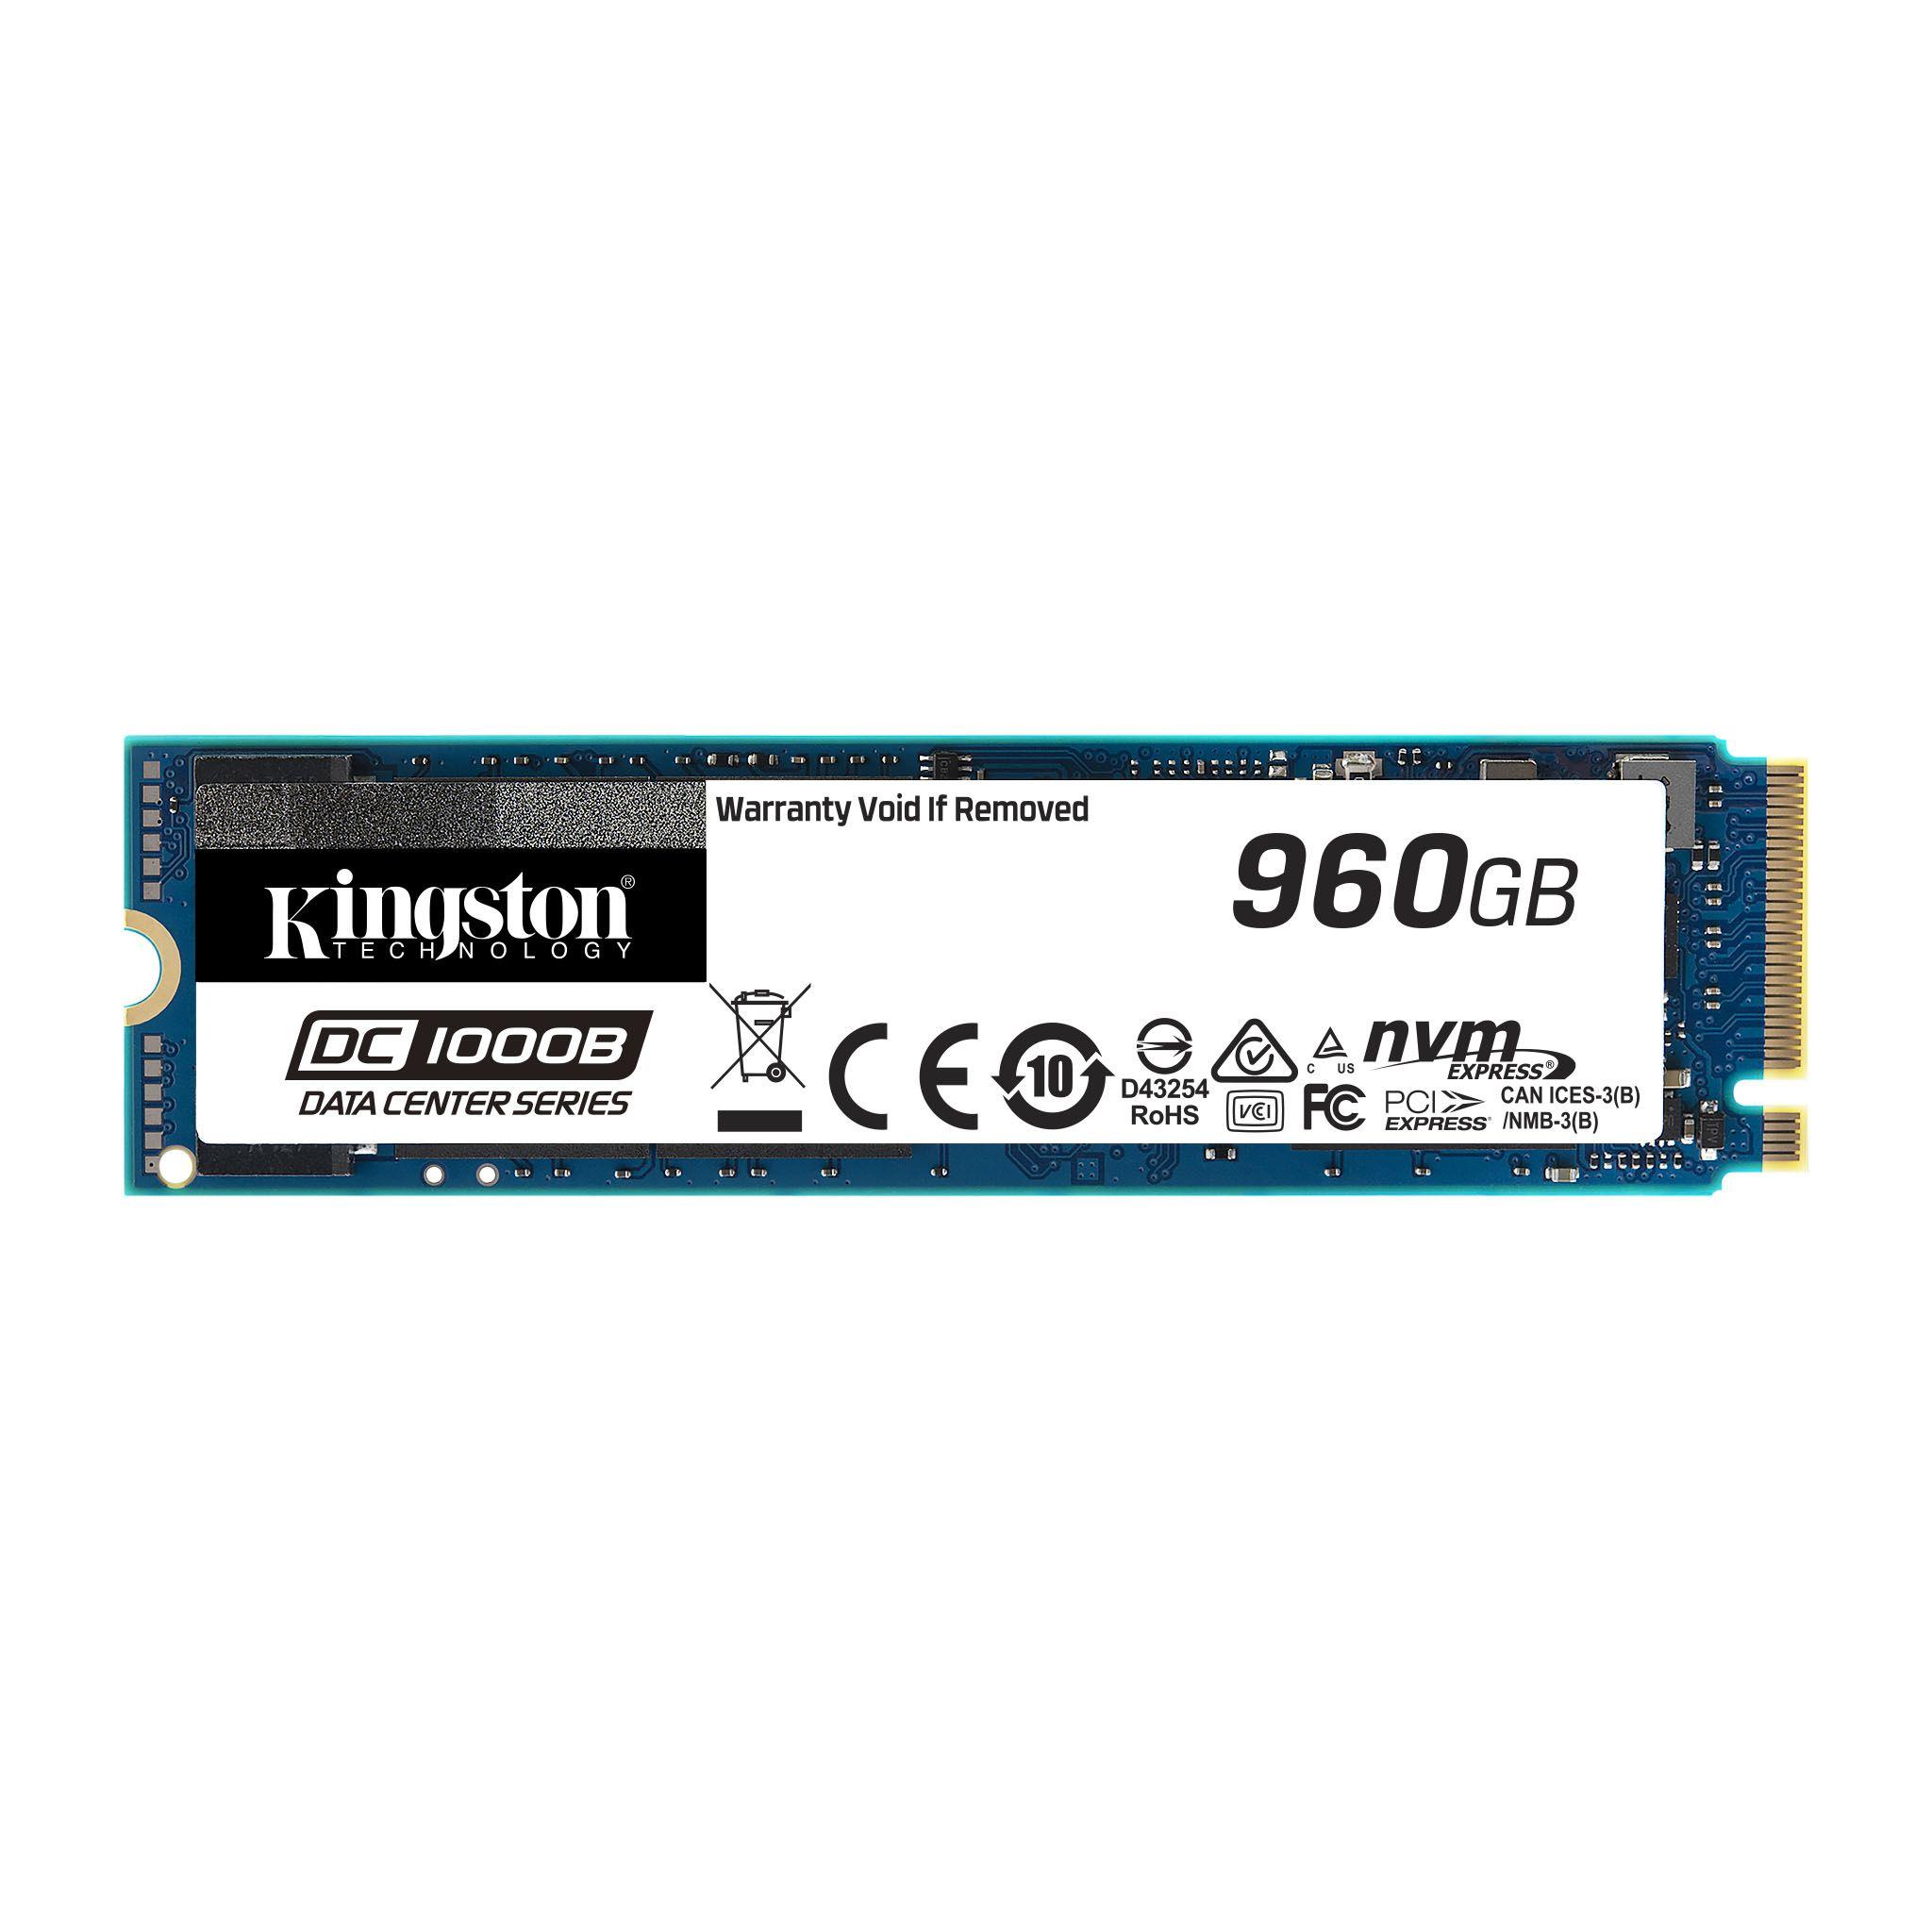 Ổ cứng SSD Kingston DC1000B 960GB M.2-2280 PCIe 3.0 X4 NVME slide image 0